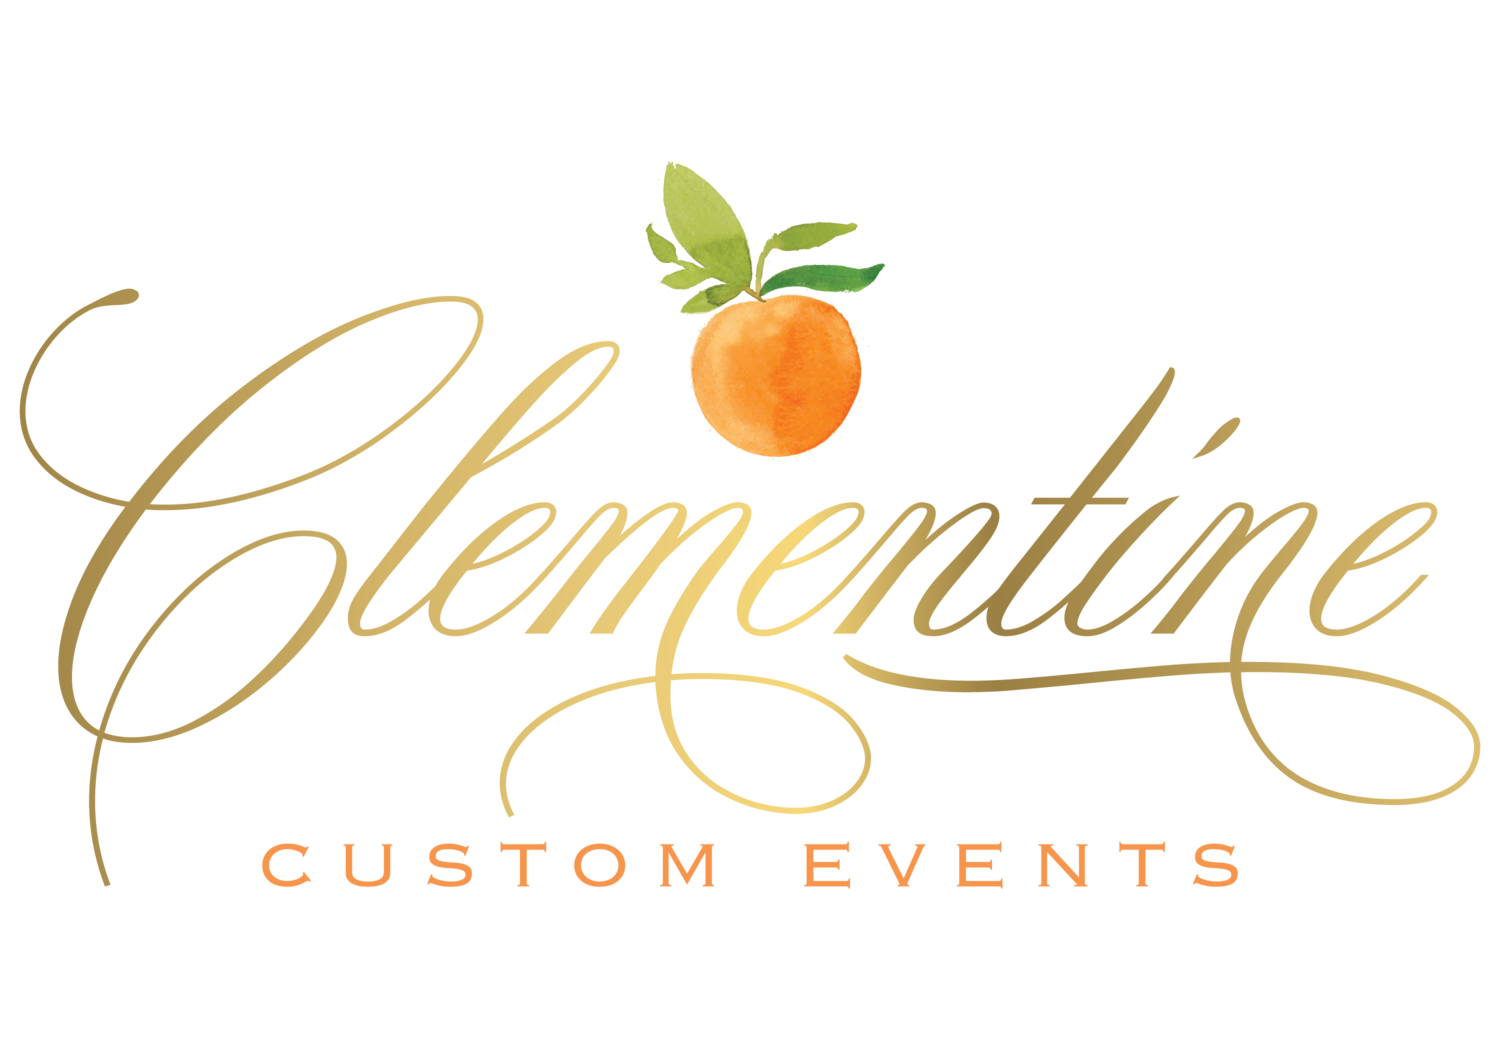 clementine custom events